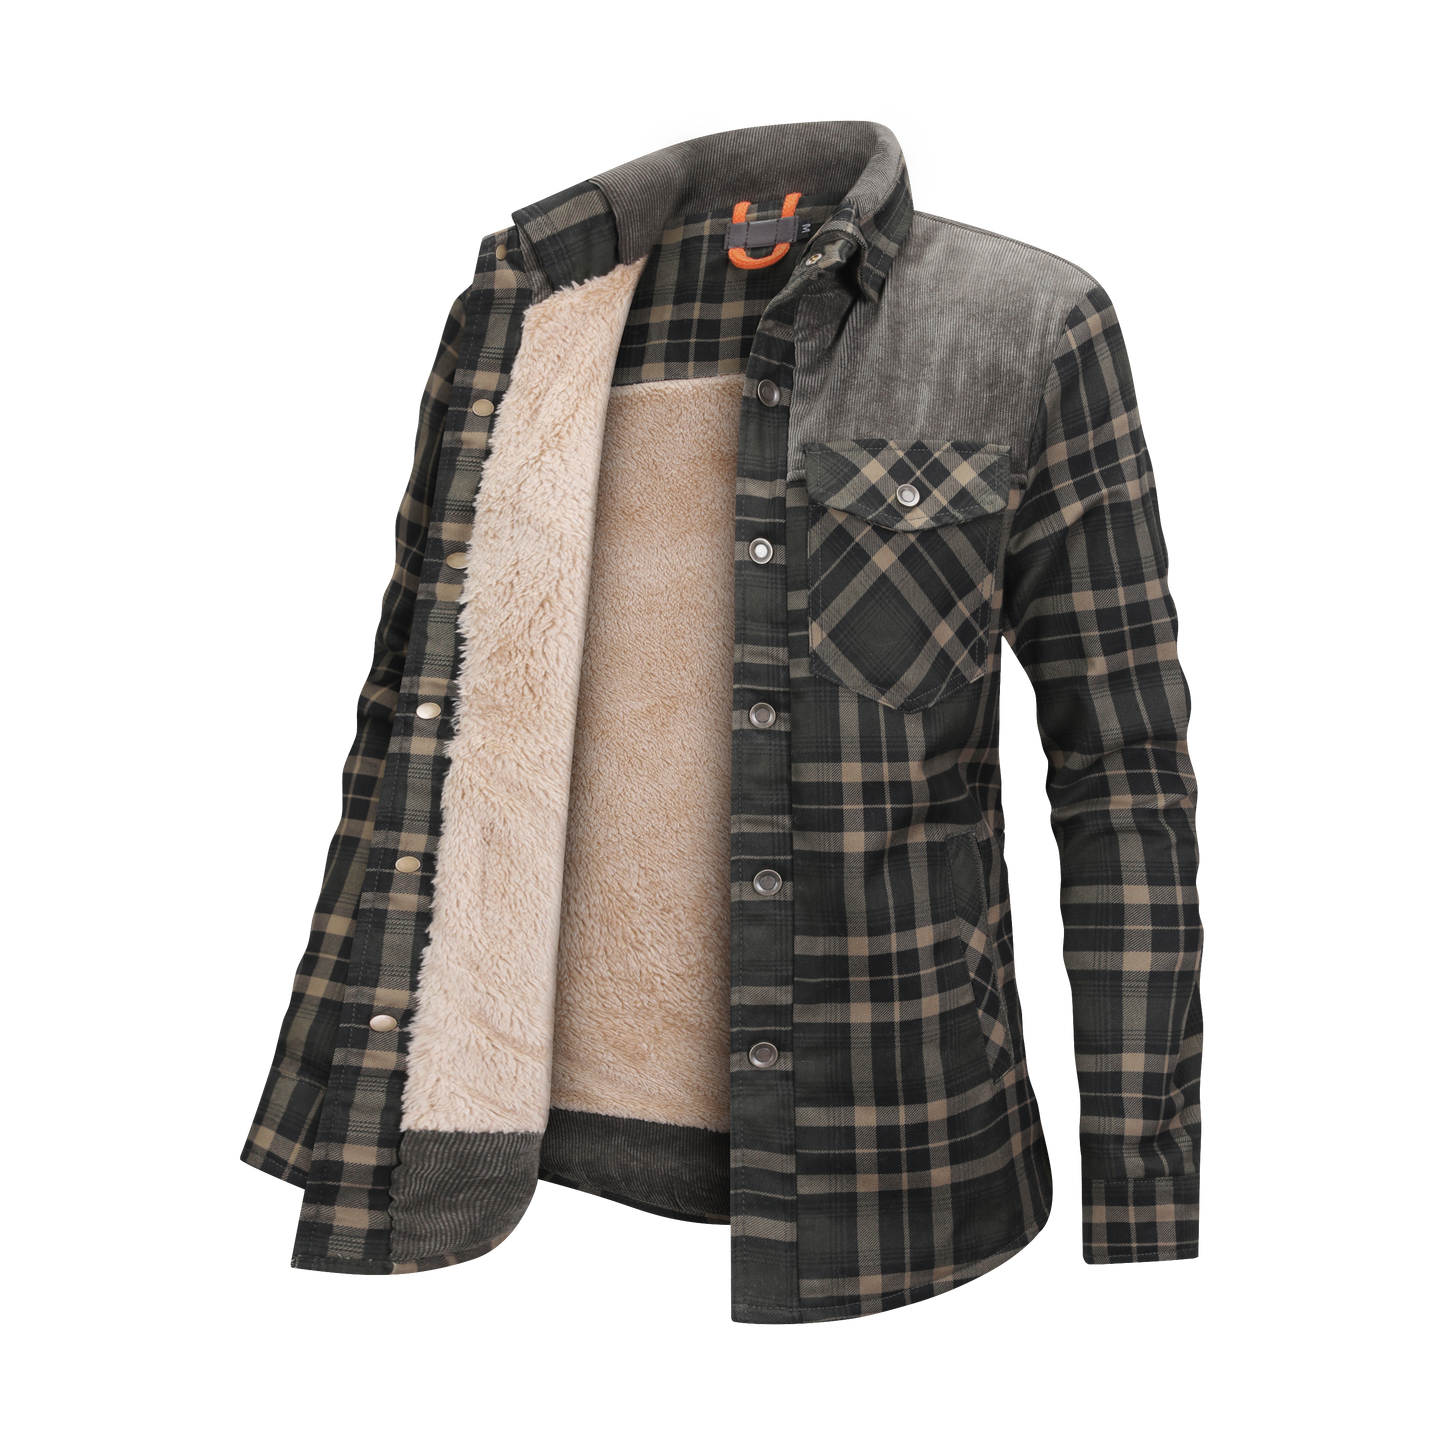 Vintro - Flannel winter jacket for women